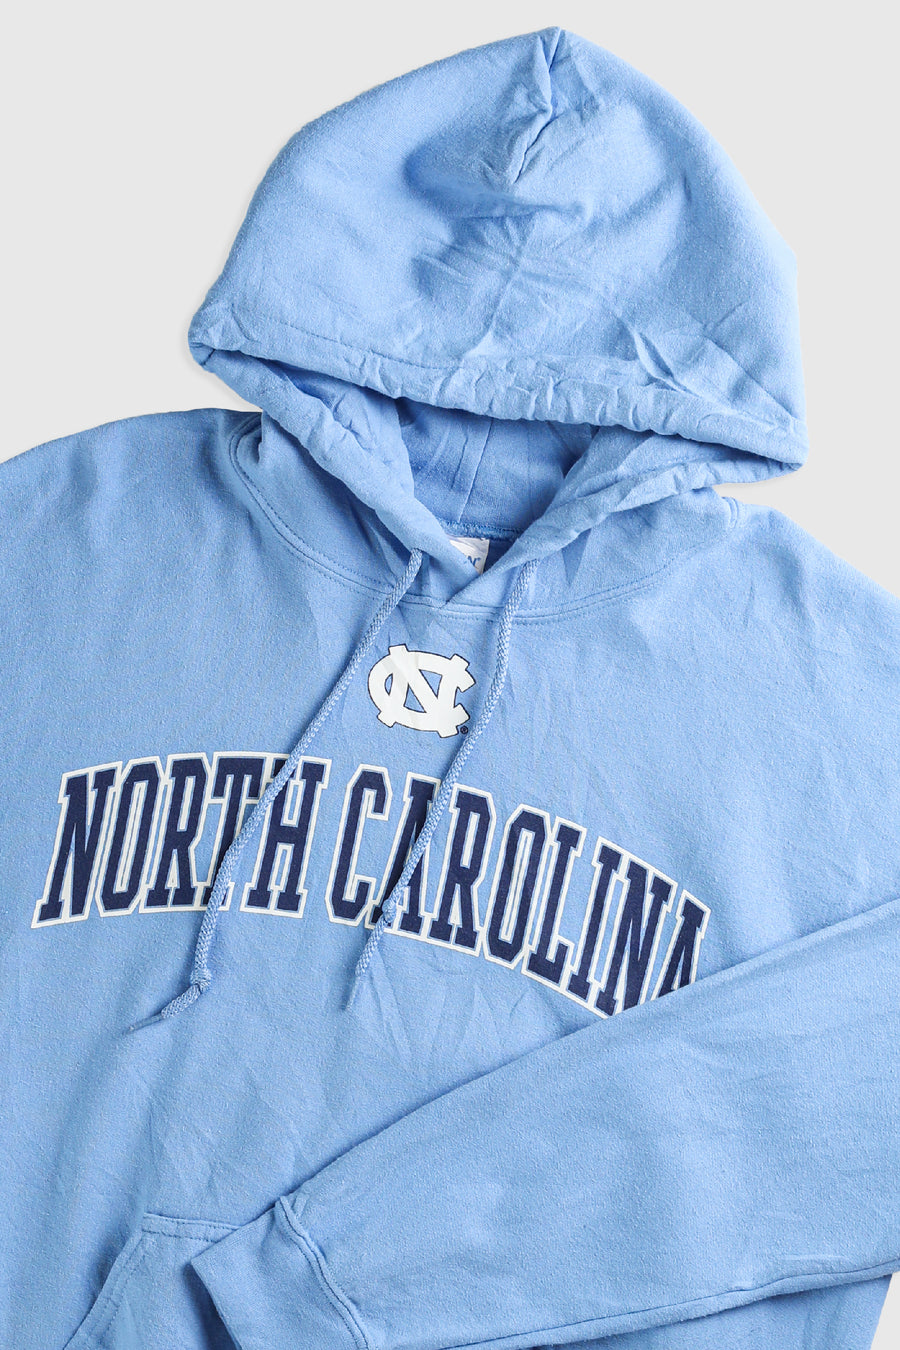 Vintage North Carolina Blue Sweatshirt - M